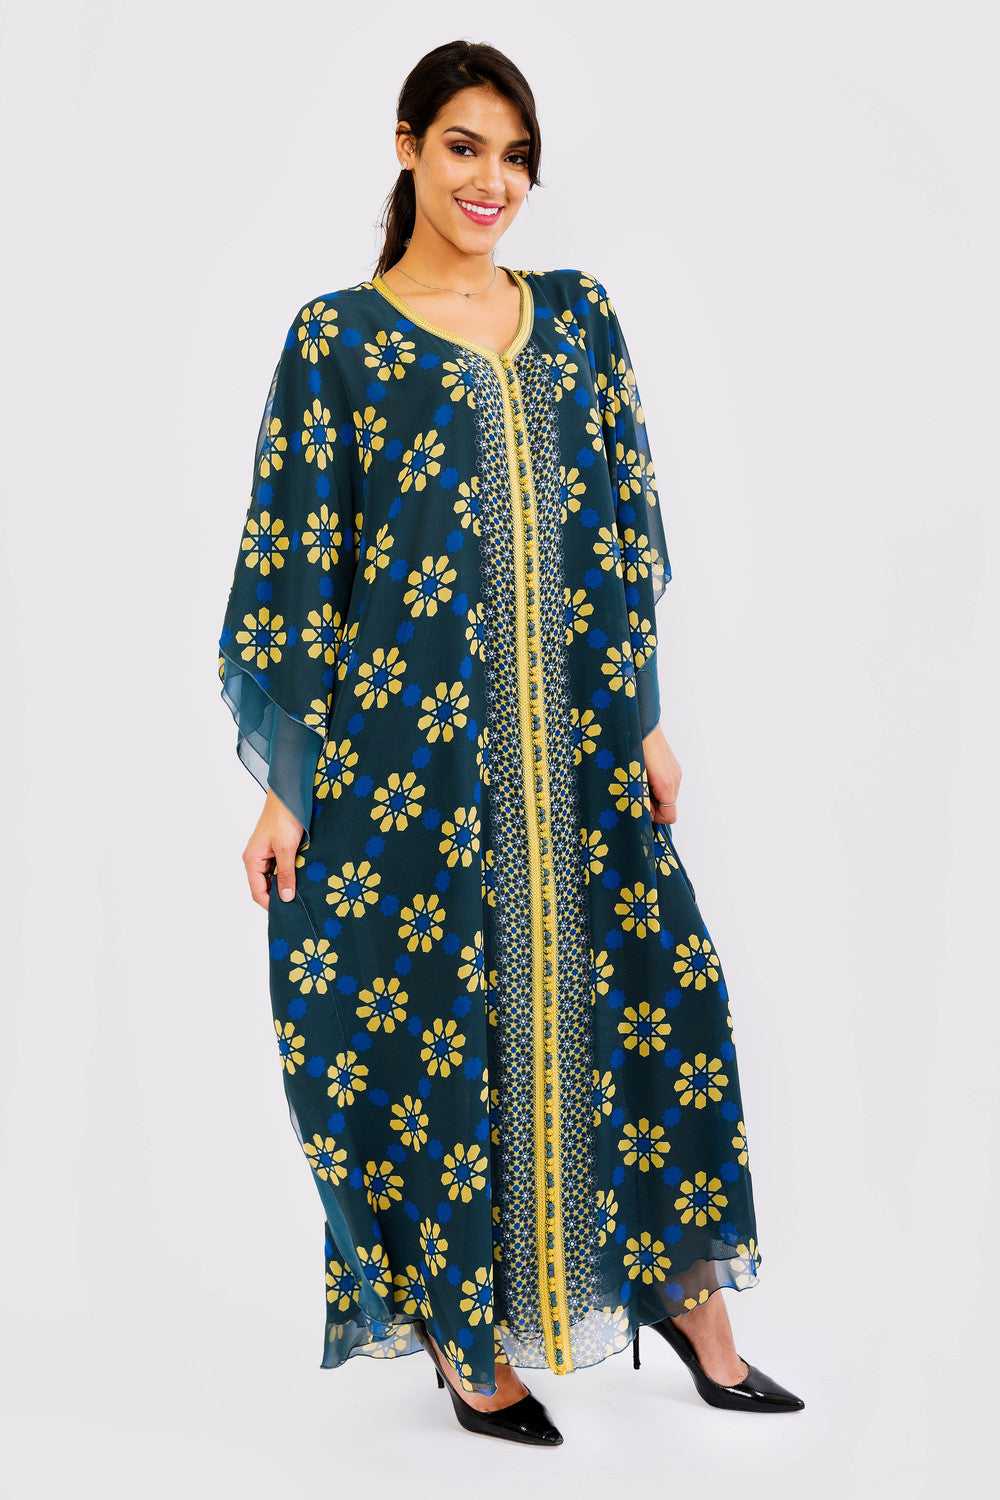 Kaftan Mayssoun Tiered Sleeve Chiffon Loose Maxi Dress Gandoura Abaya in Floral Print